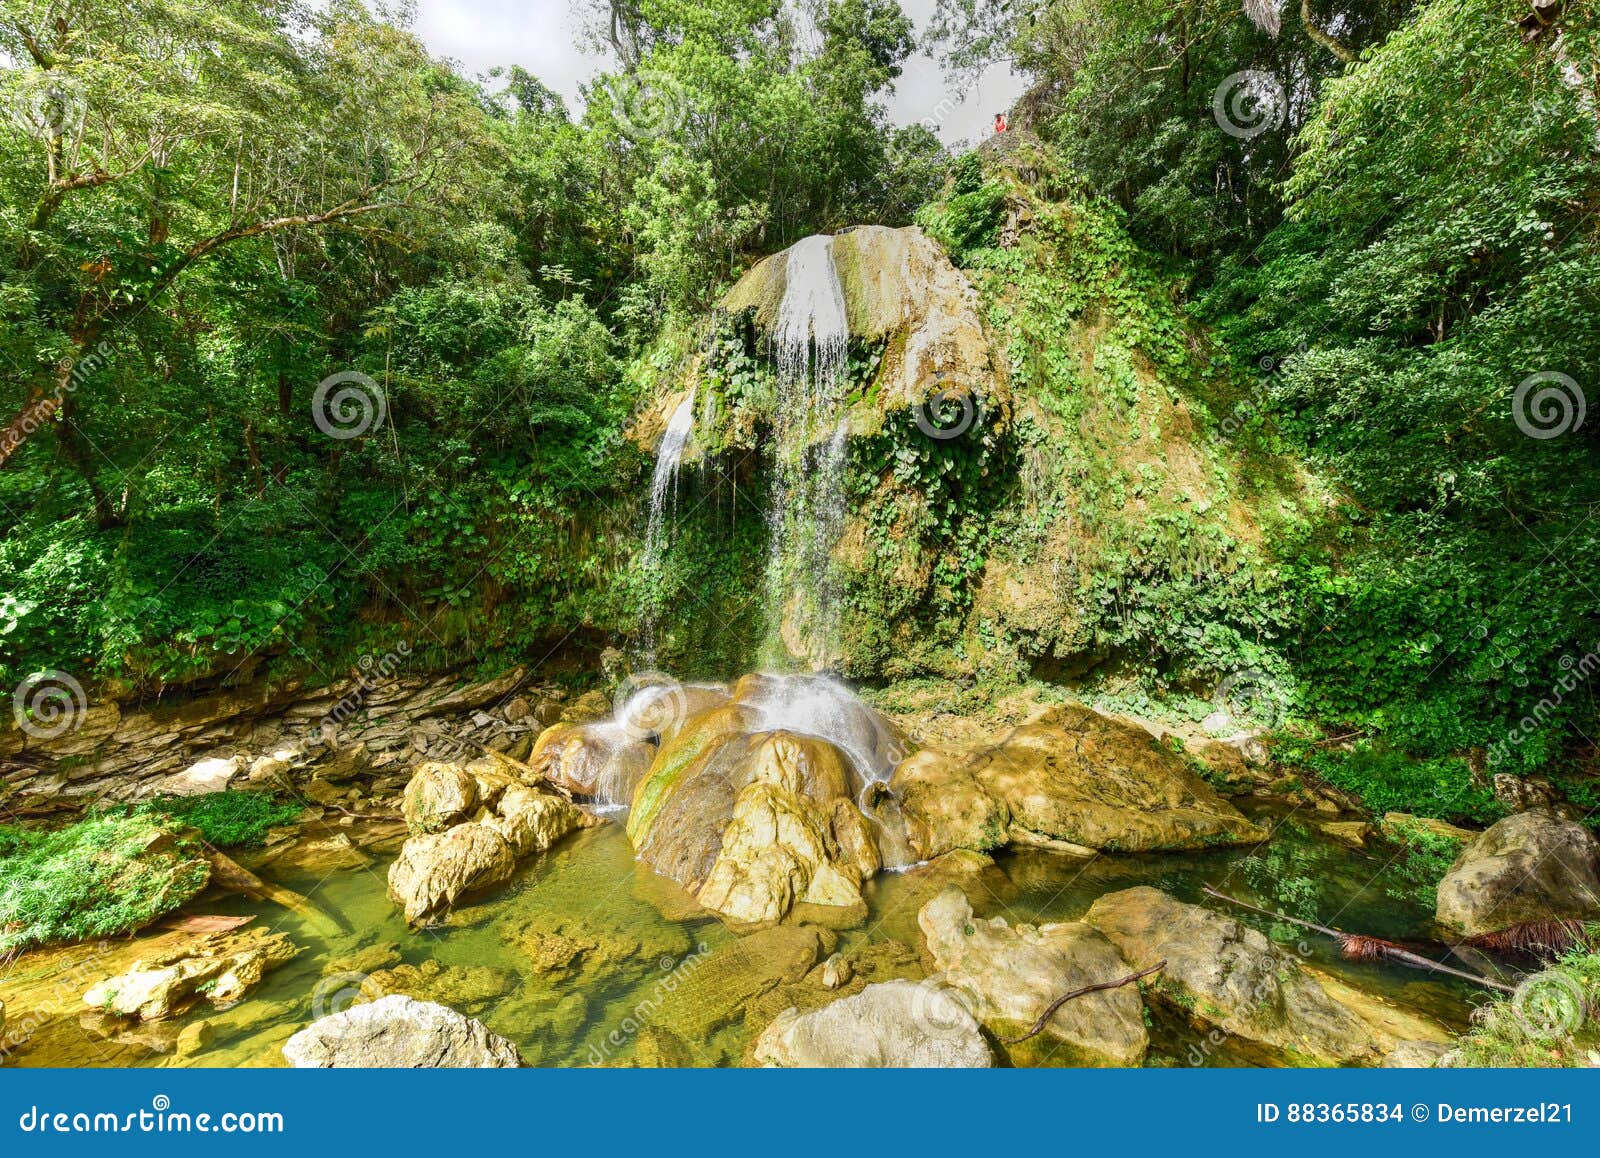 soroa waterfall - pinar del rio, cuba